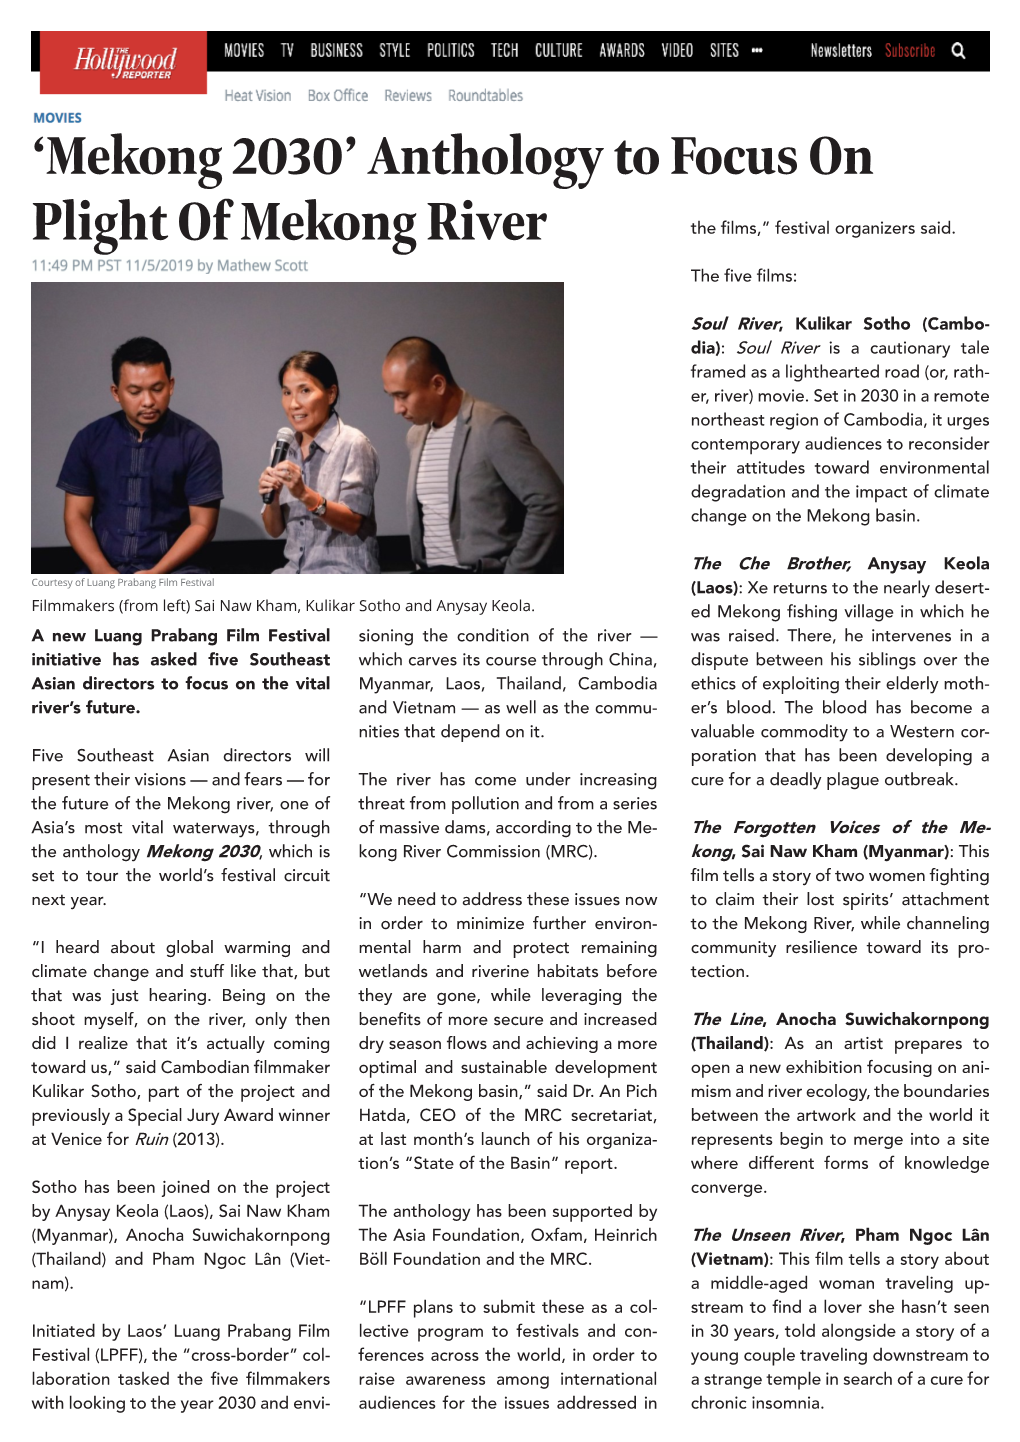 Mekong 2030’ Anthology to Focus on Plight of Mekong River ������������������������������������ �����������